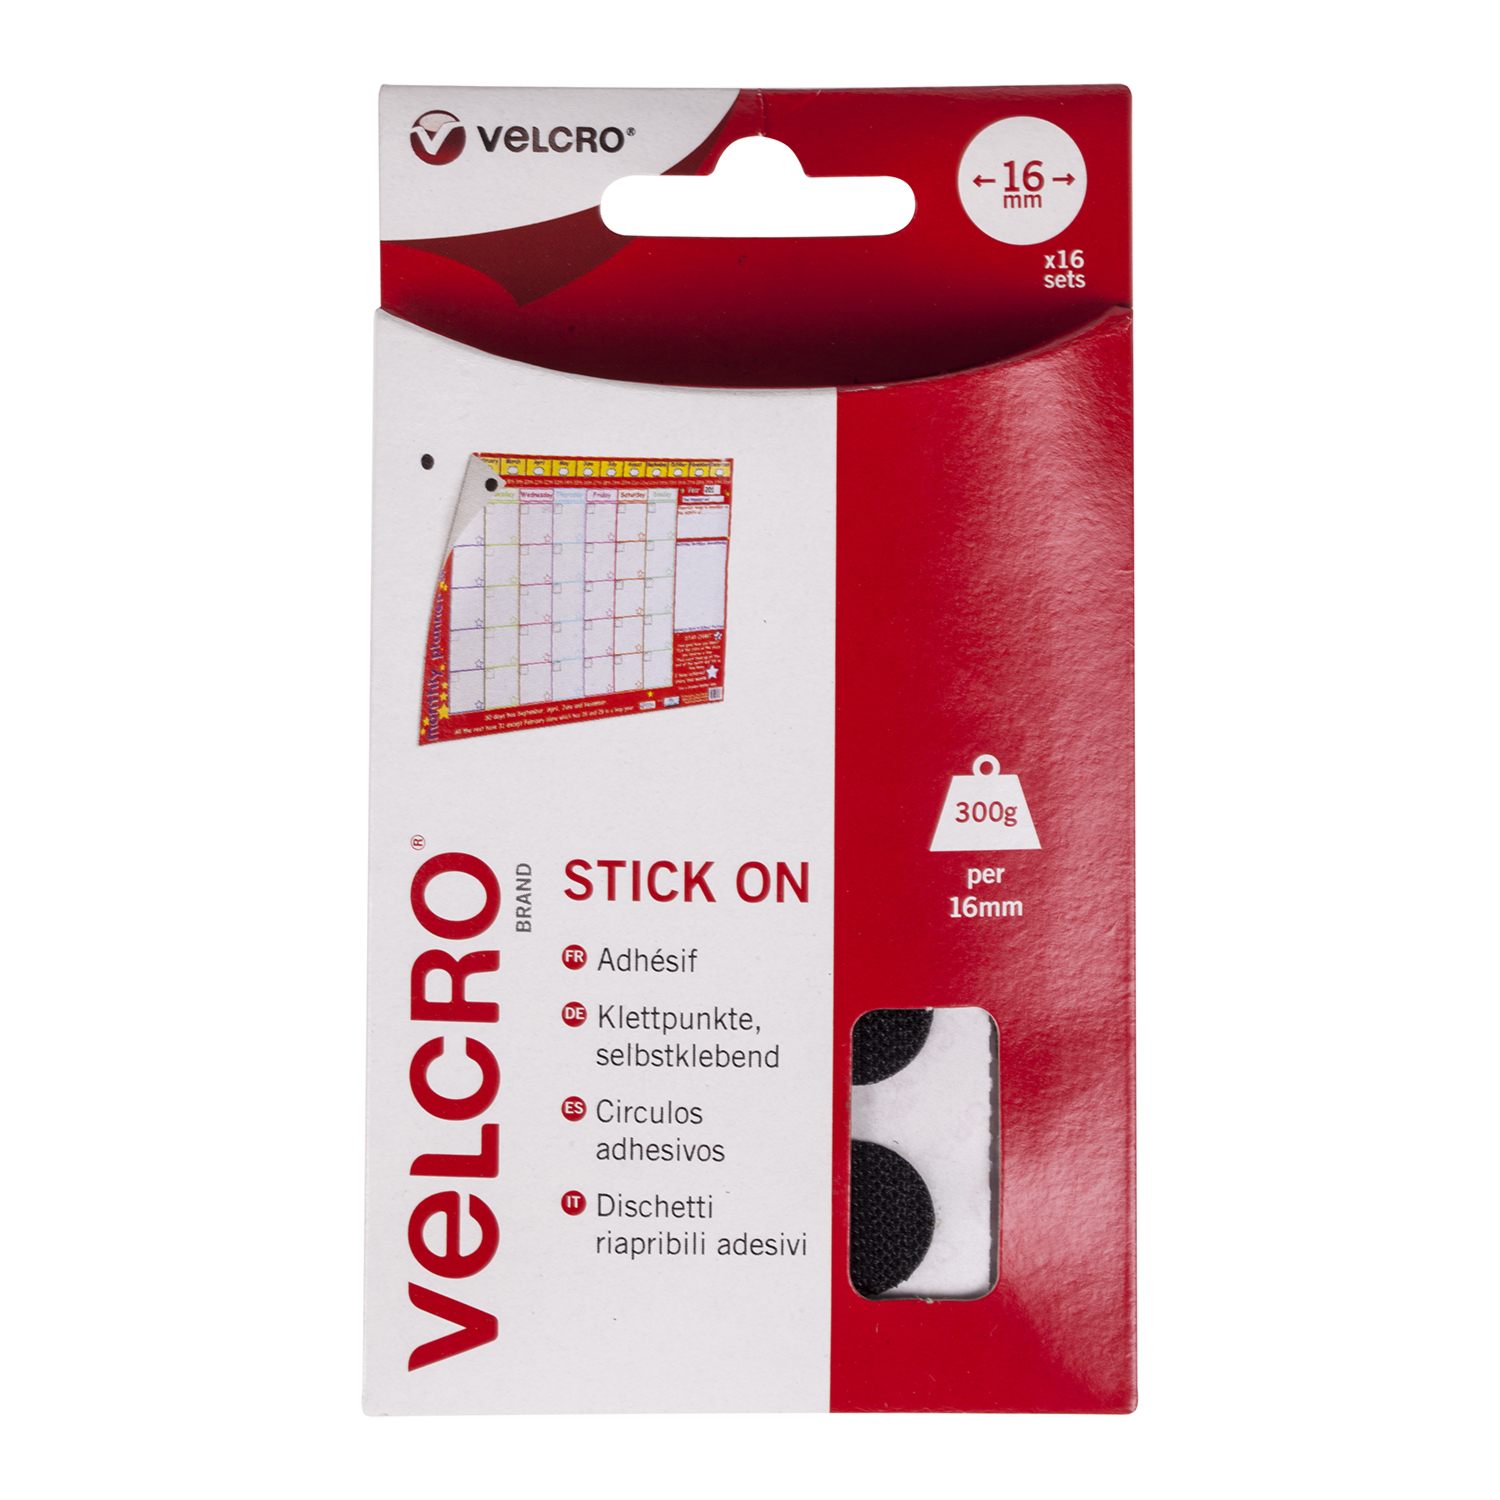 VELCRO Brand Stick On Coins - Black Image